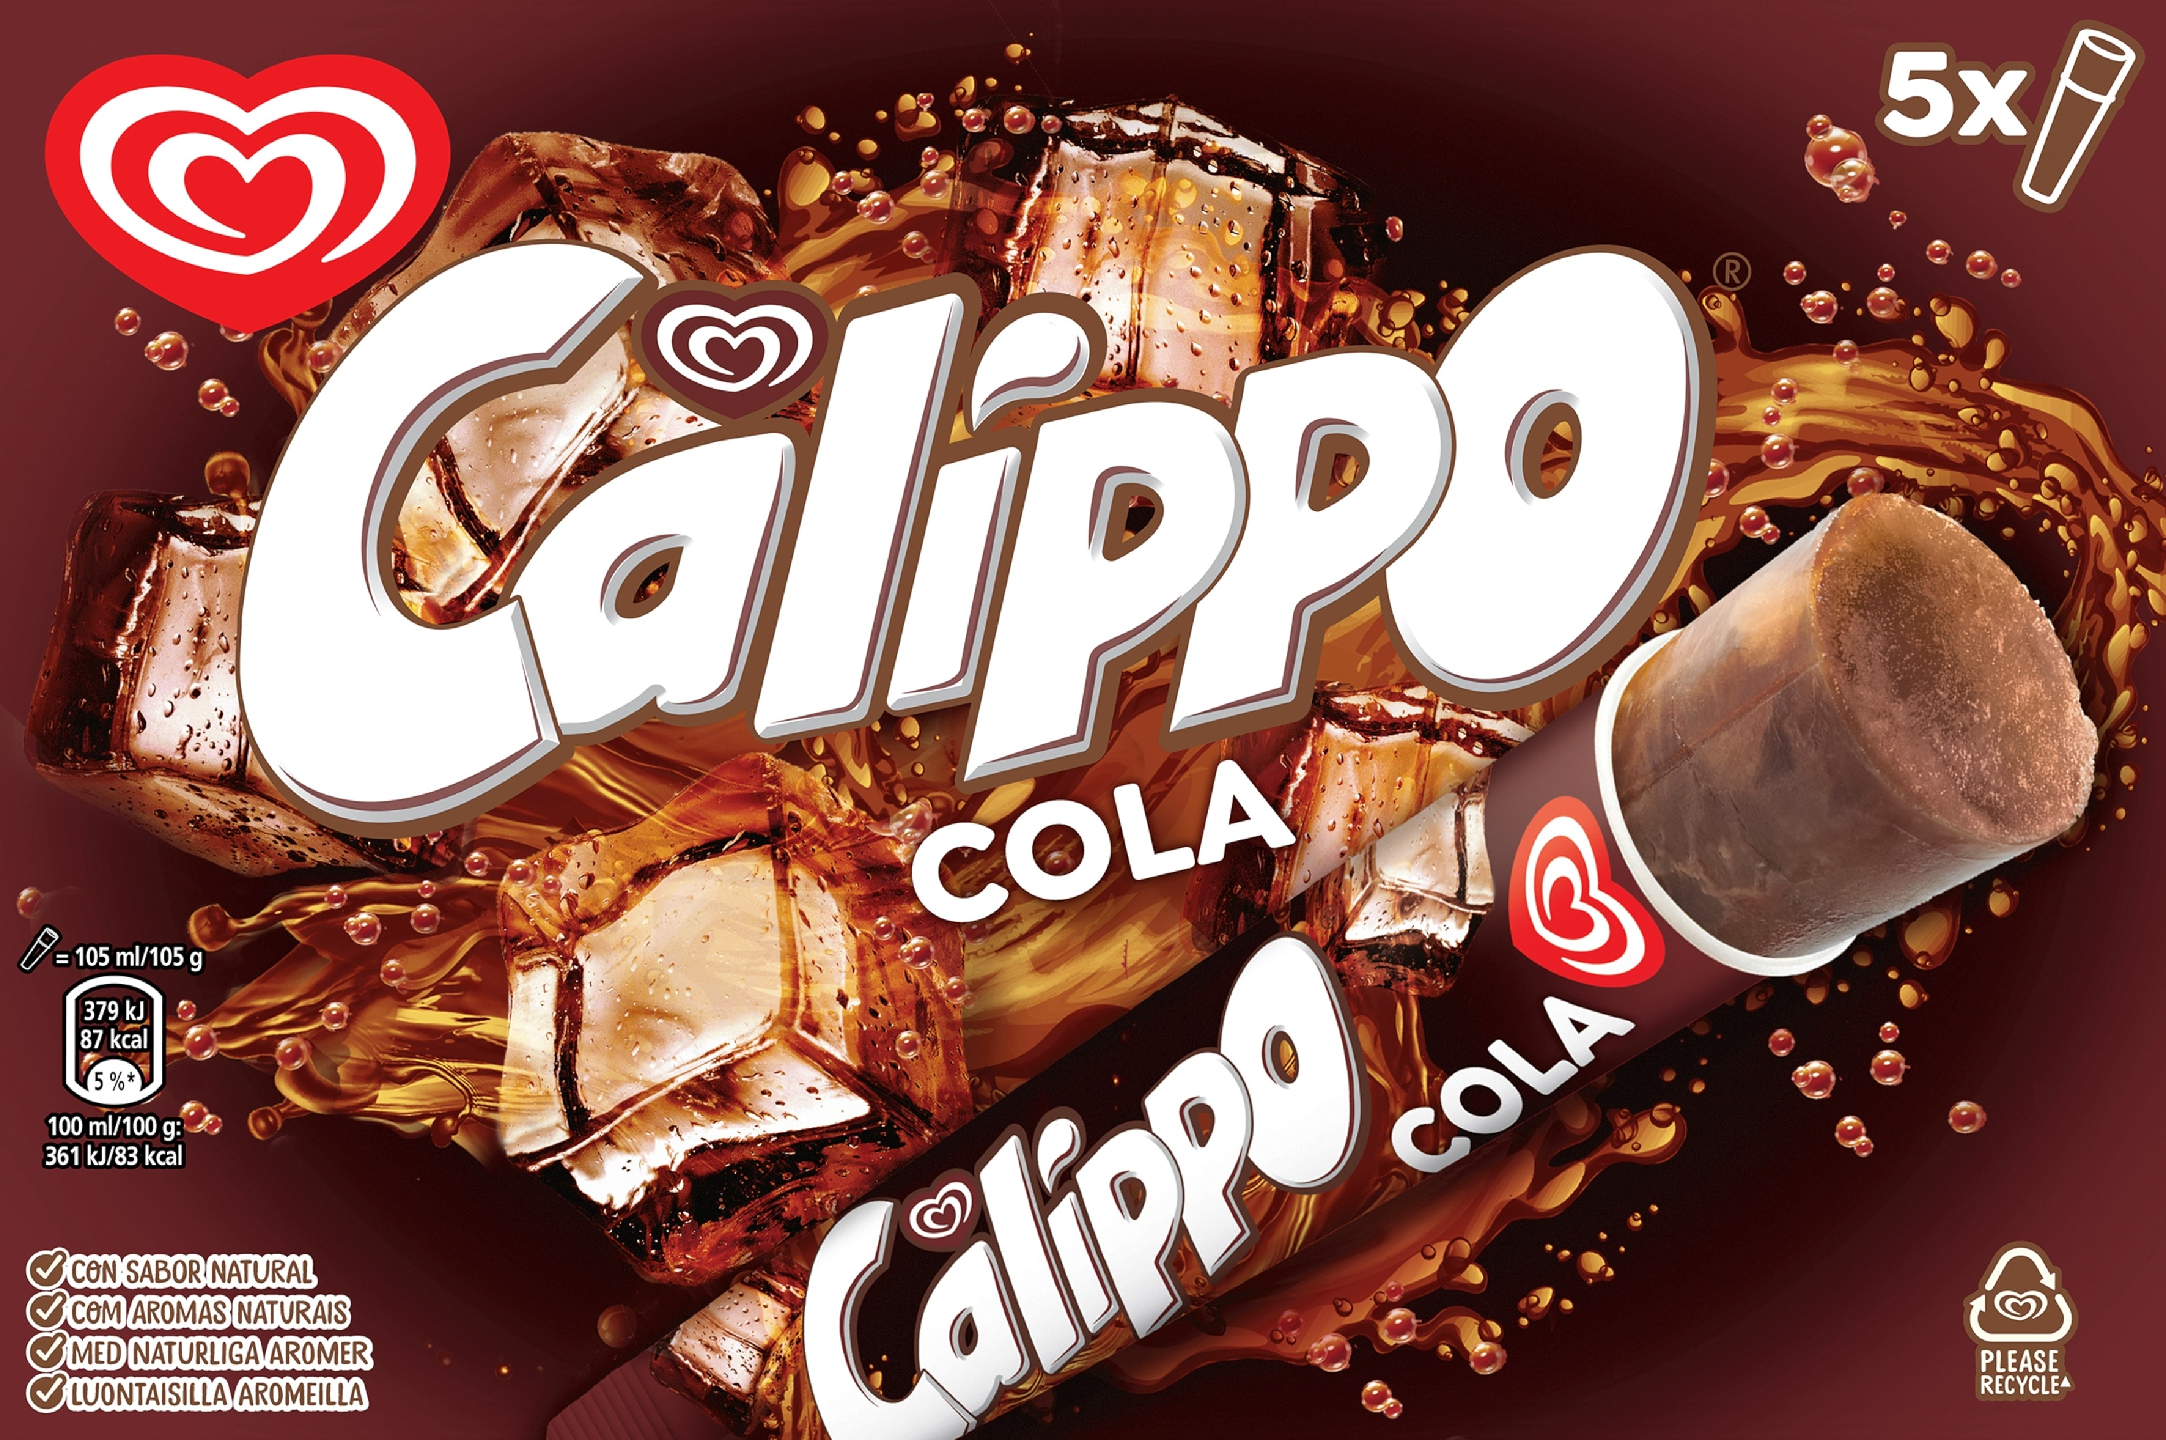 Calippo Cola limujää 5 kpl 525 ml/643 g